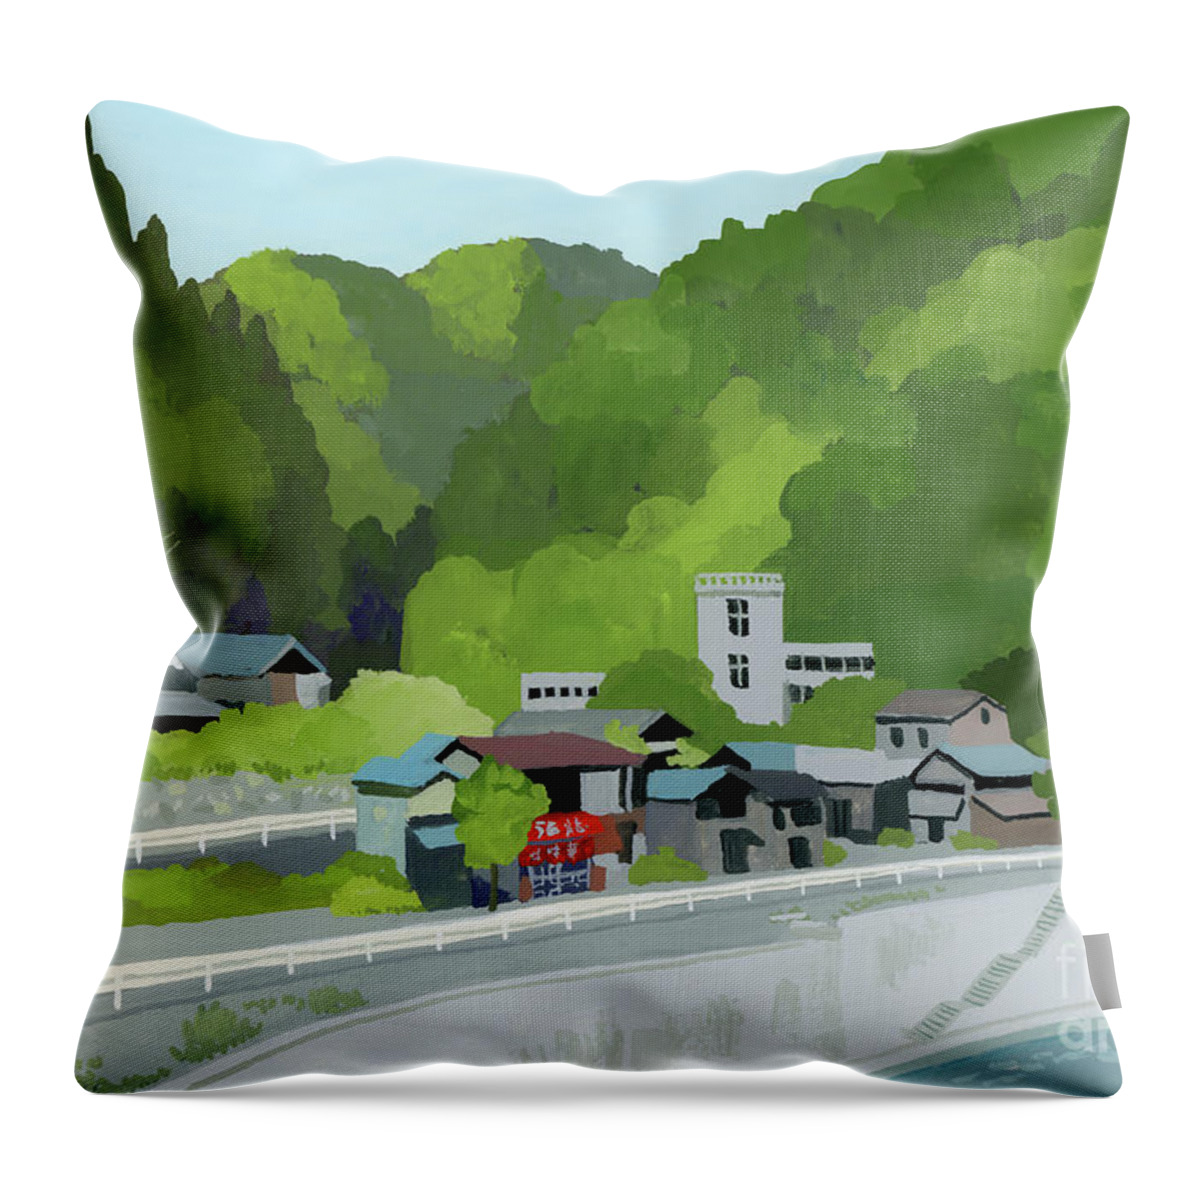 Dining Room In The Mountain Village Throw Pillow featuring the painting Dining Room In The Mountain Village by Hiroyuki Izutsu